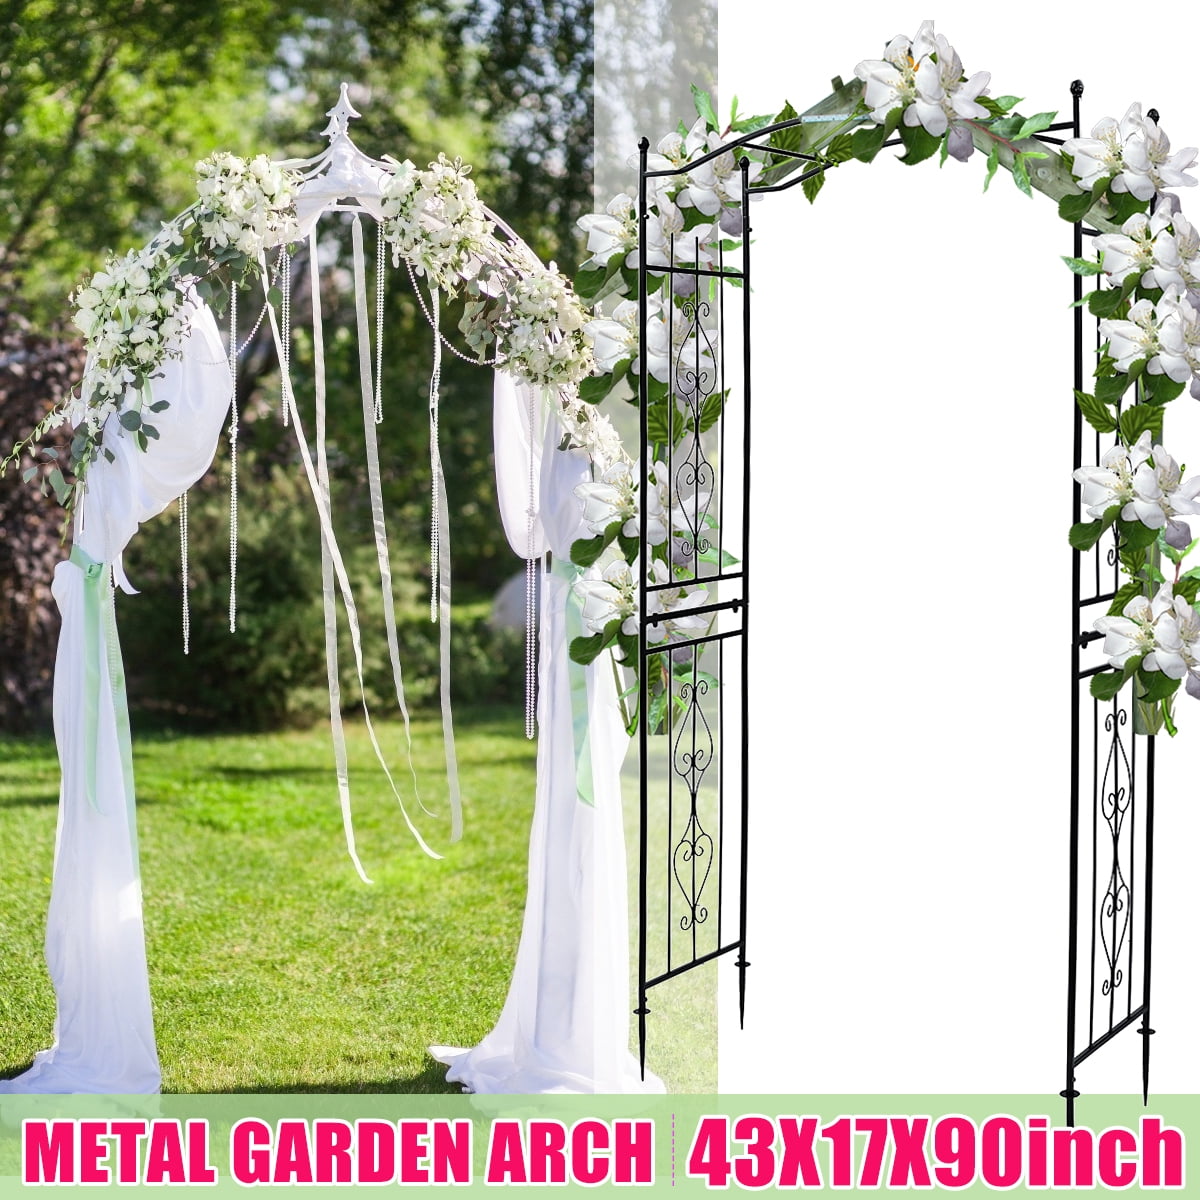 Details about   Metal Garden Arch Wedding Arbor Ivy Trellis Rose Patio Climbing Plant Gate 